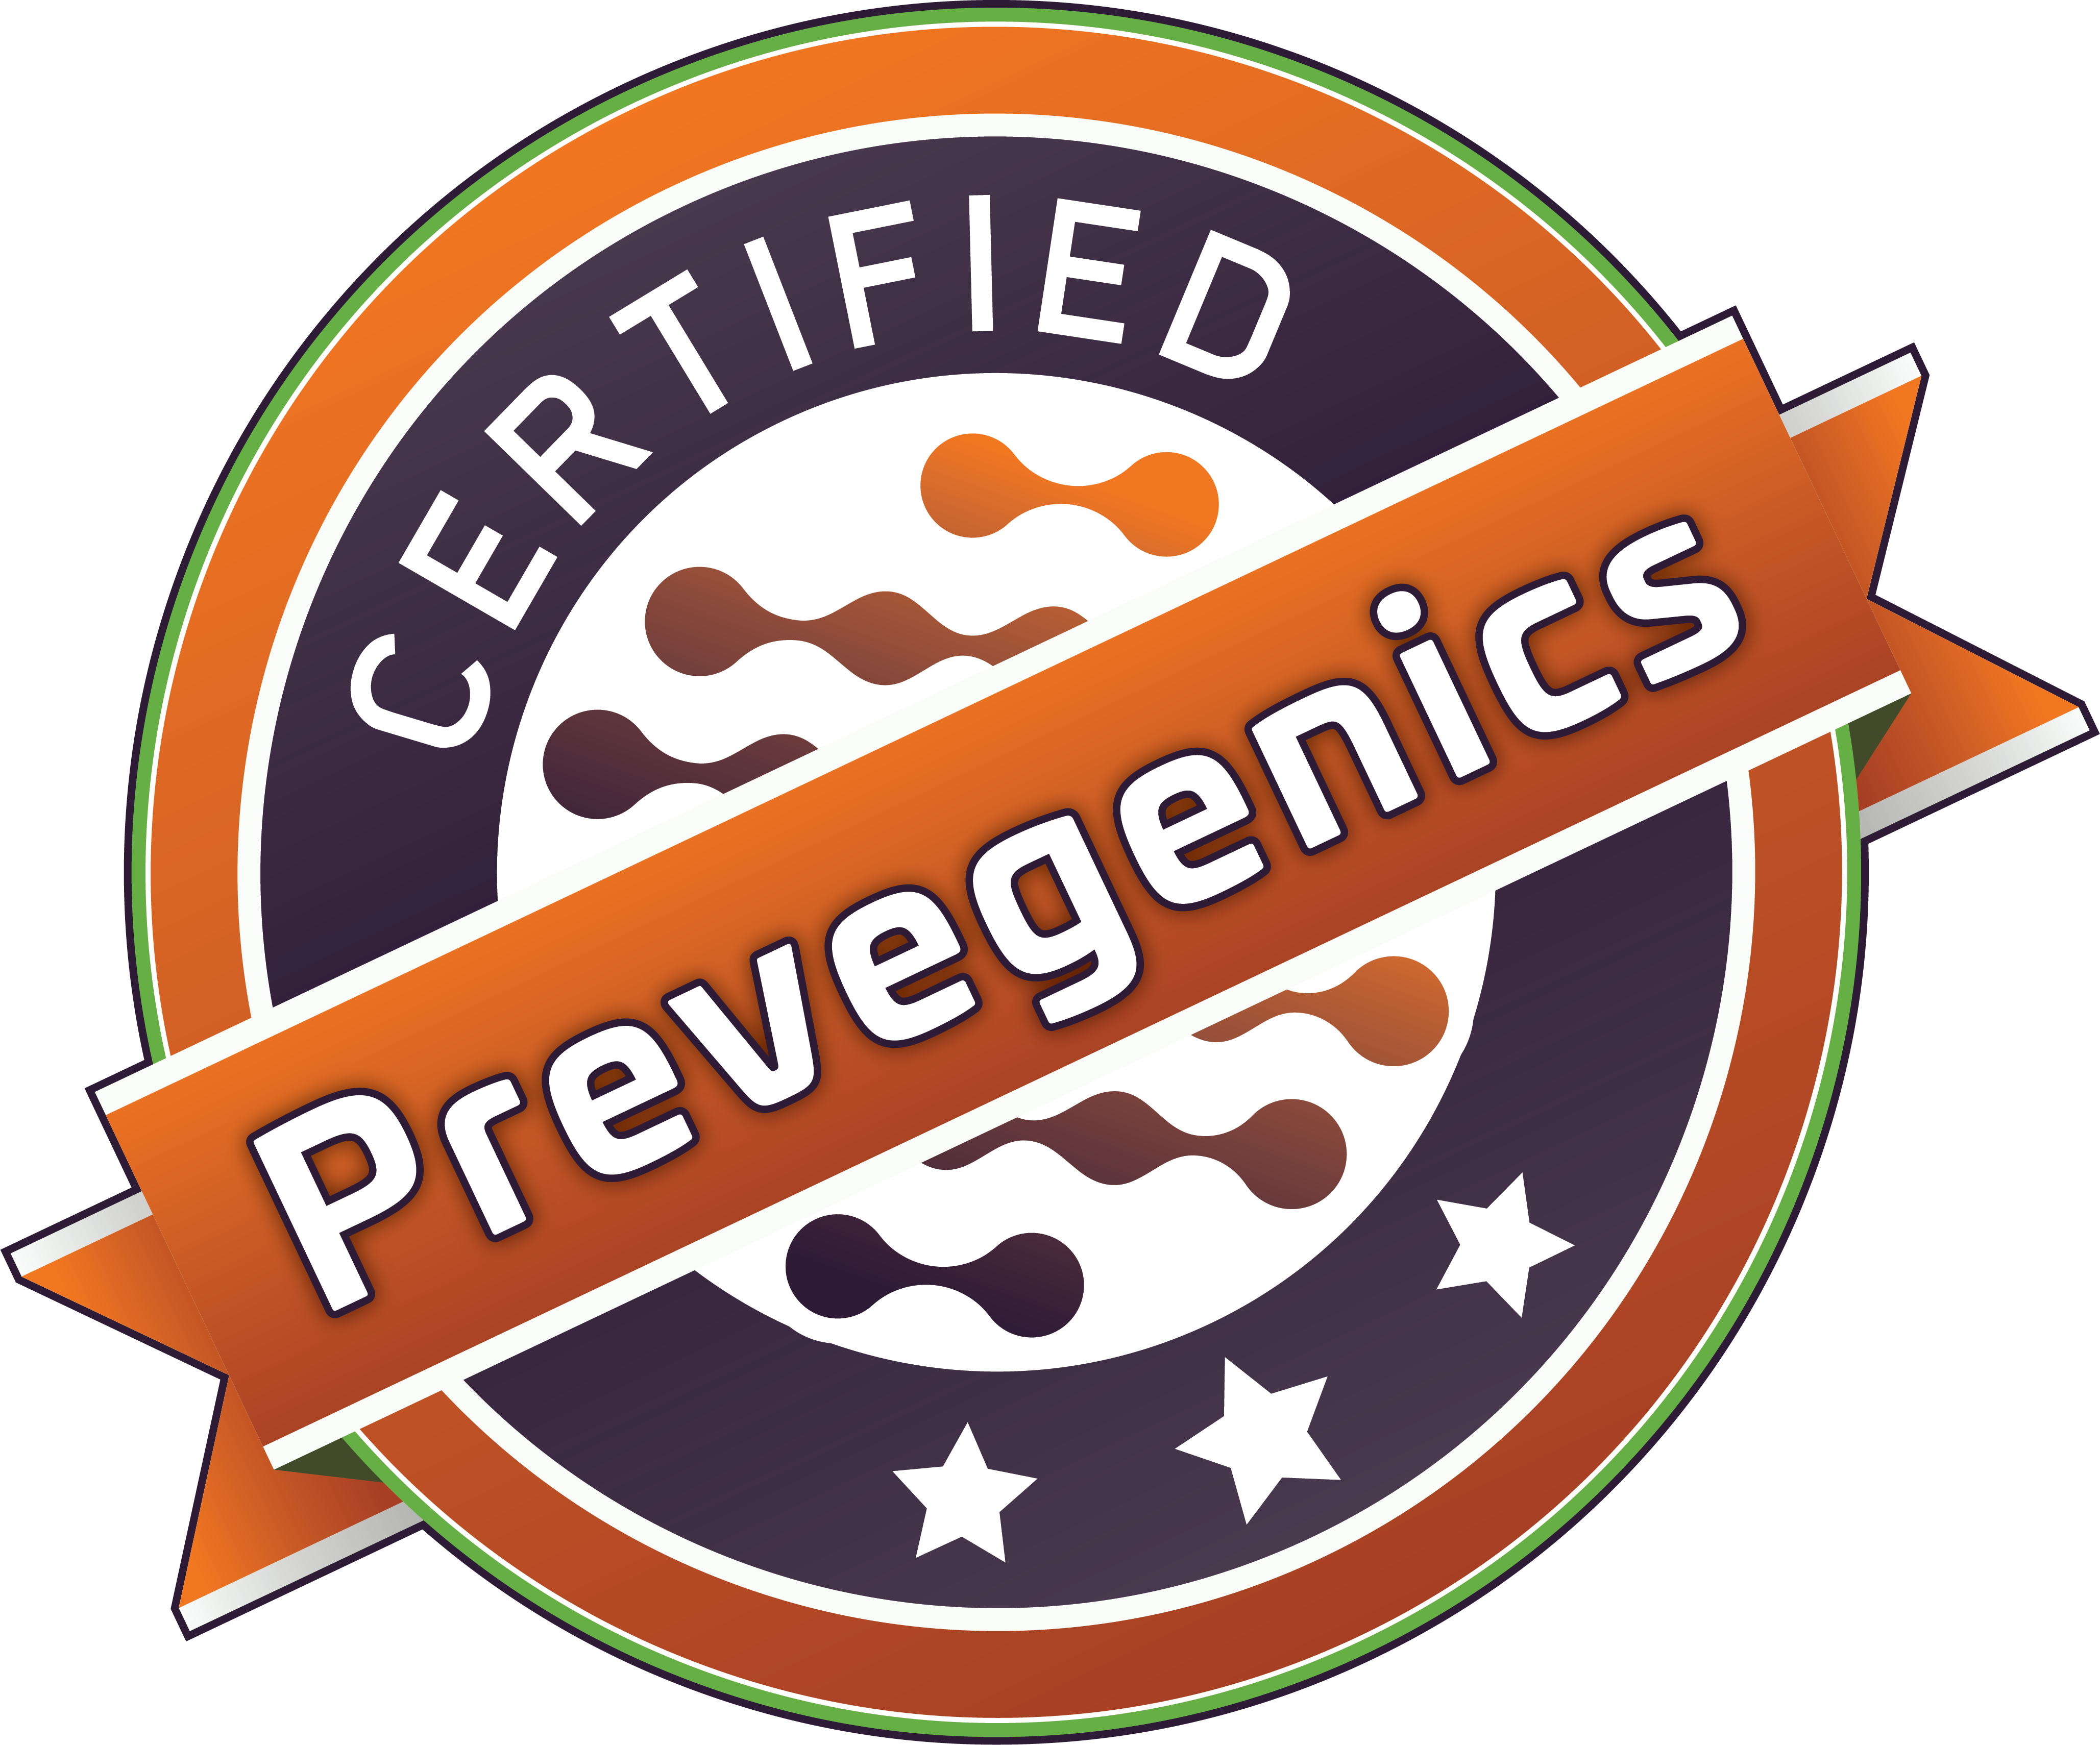 what-is-certified-prevegenics